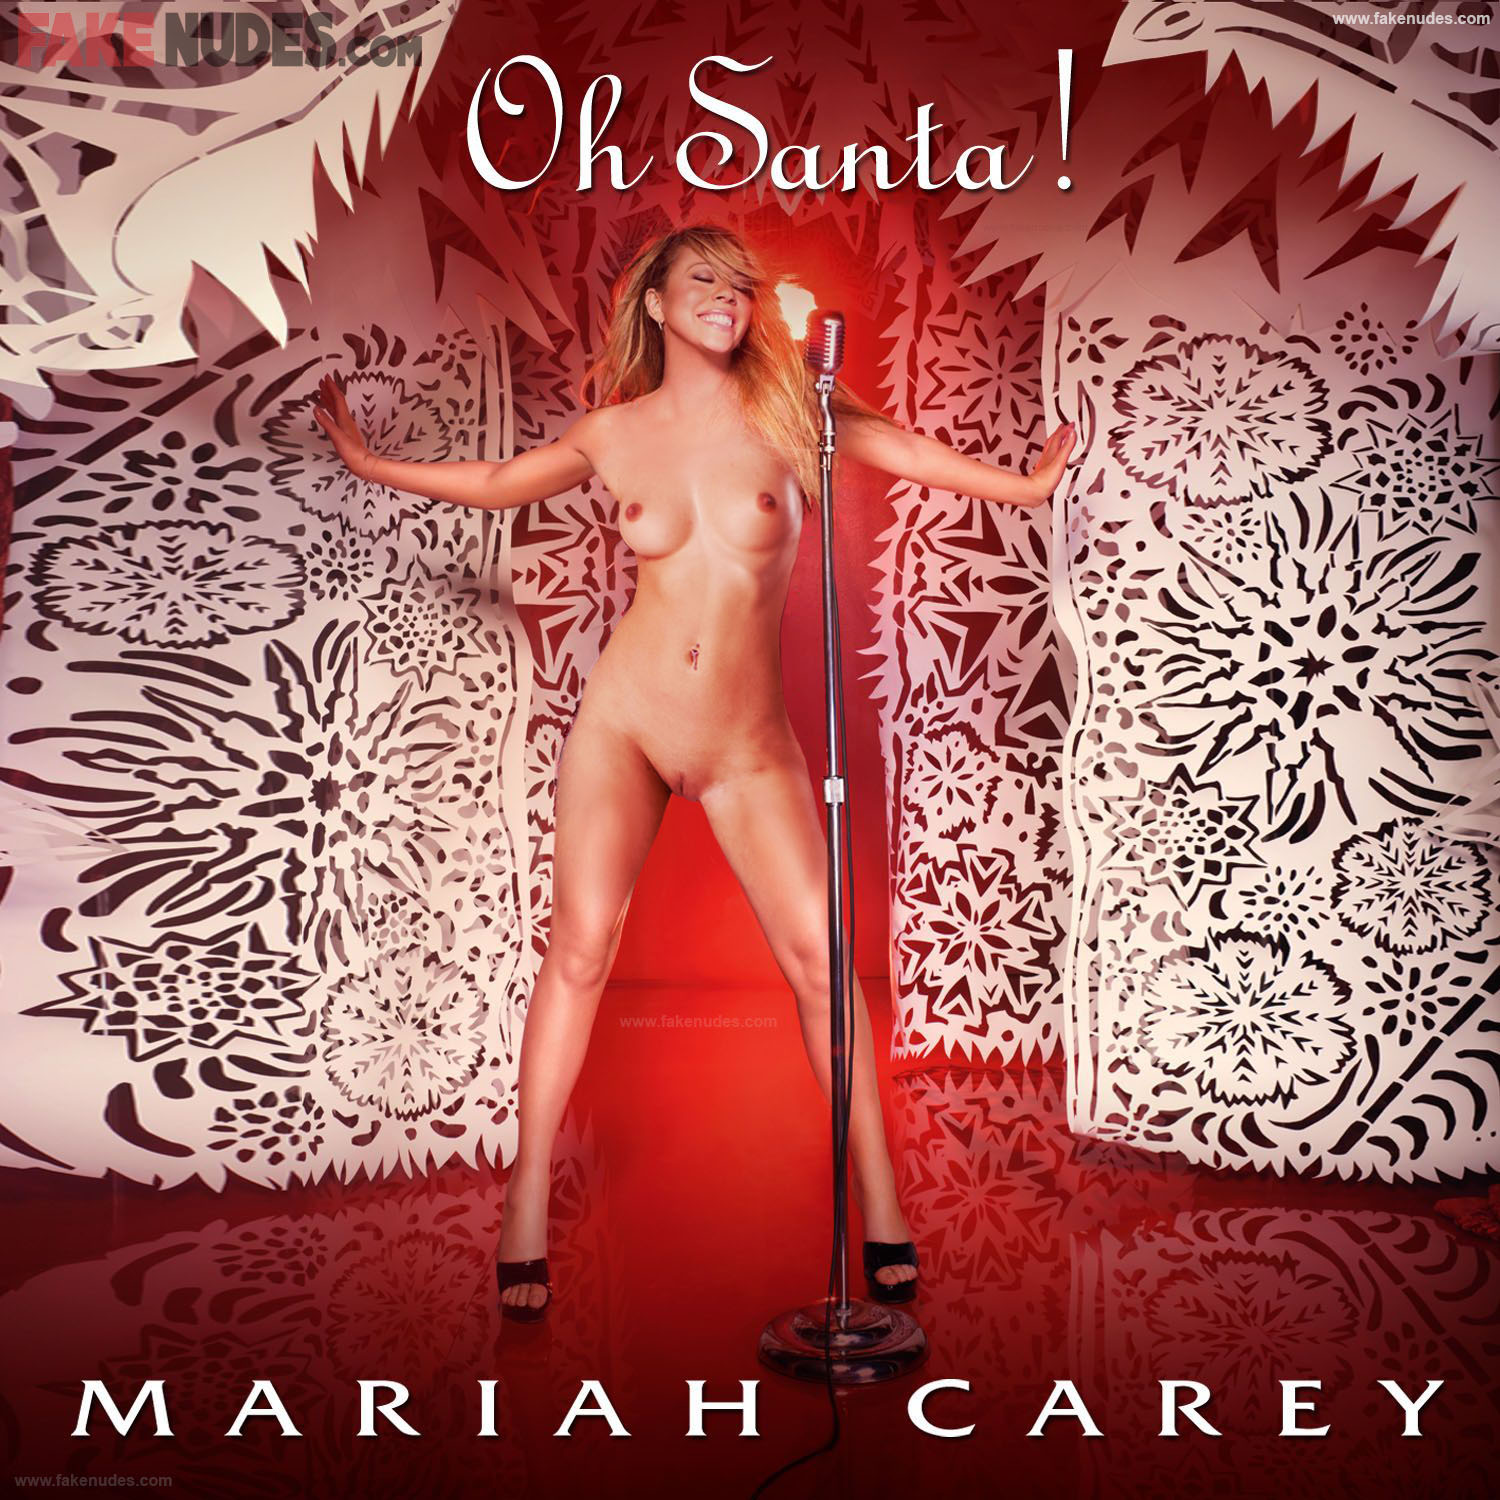 Mariah carey naked fakes